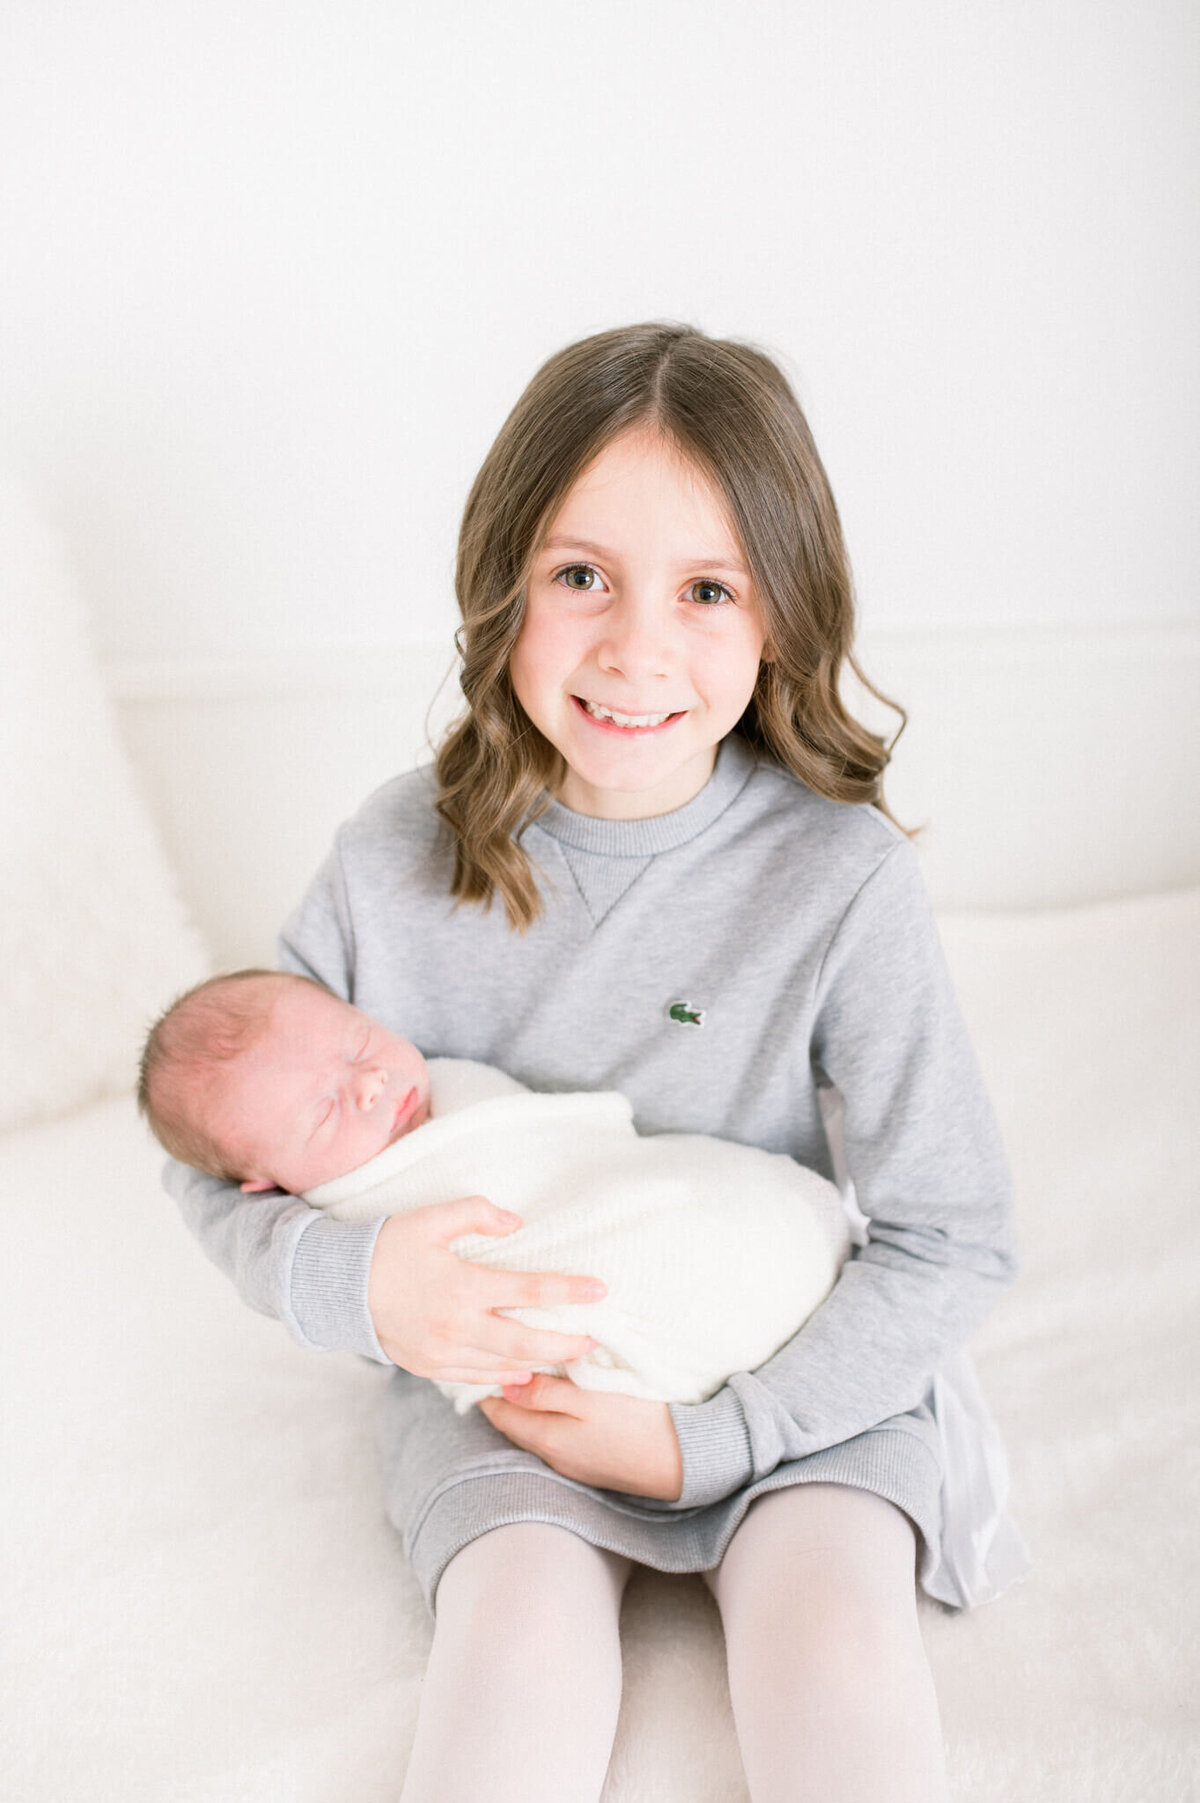 Niagara newborn photographer captures sister holding newborn brother